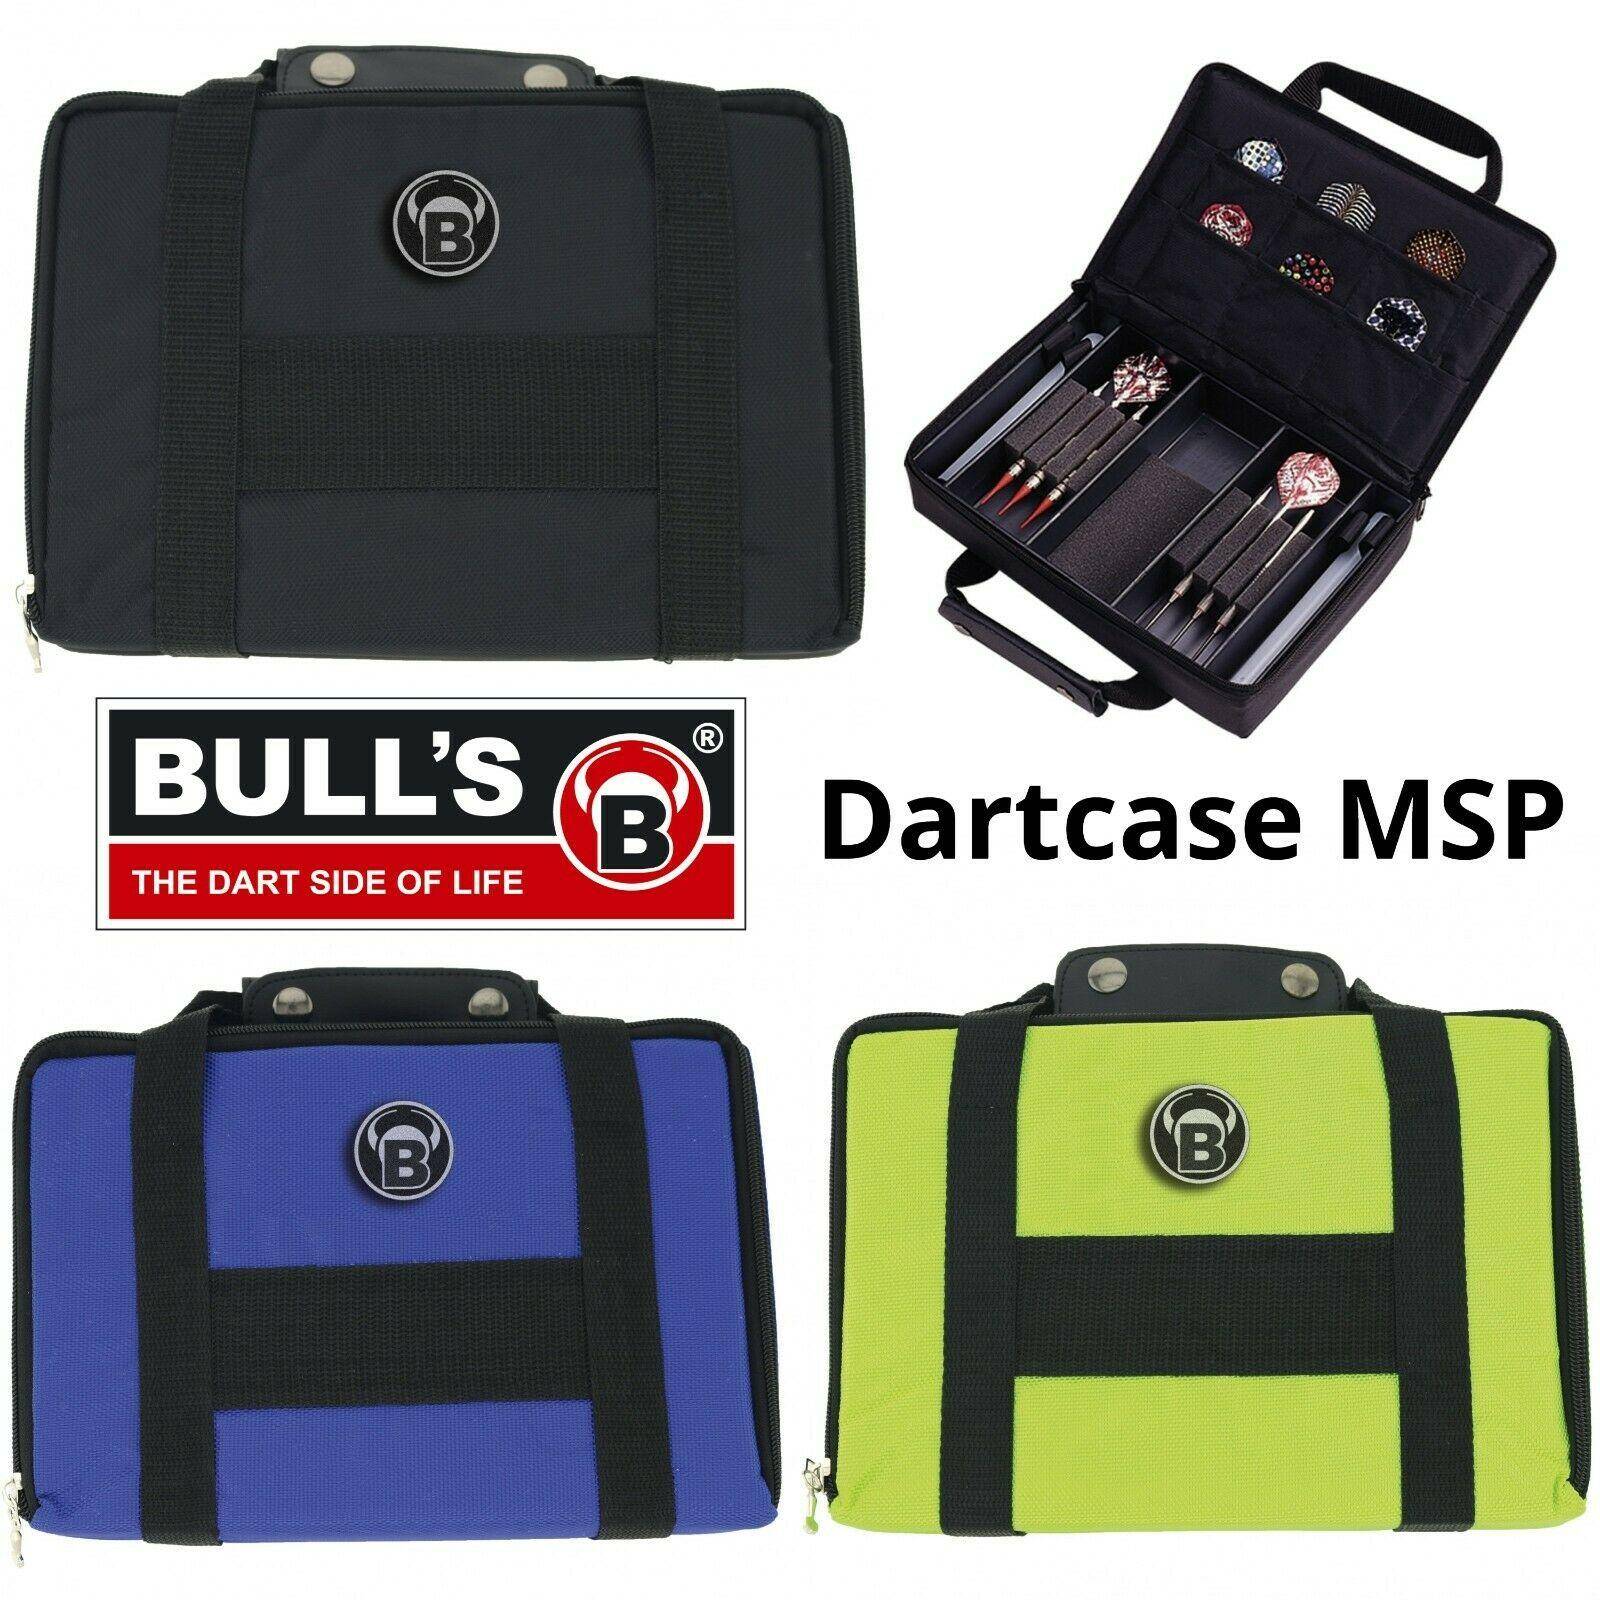 Bulls MSP dart case dart case various colors - dart bag